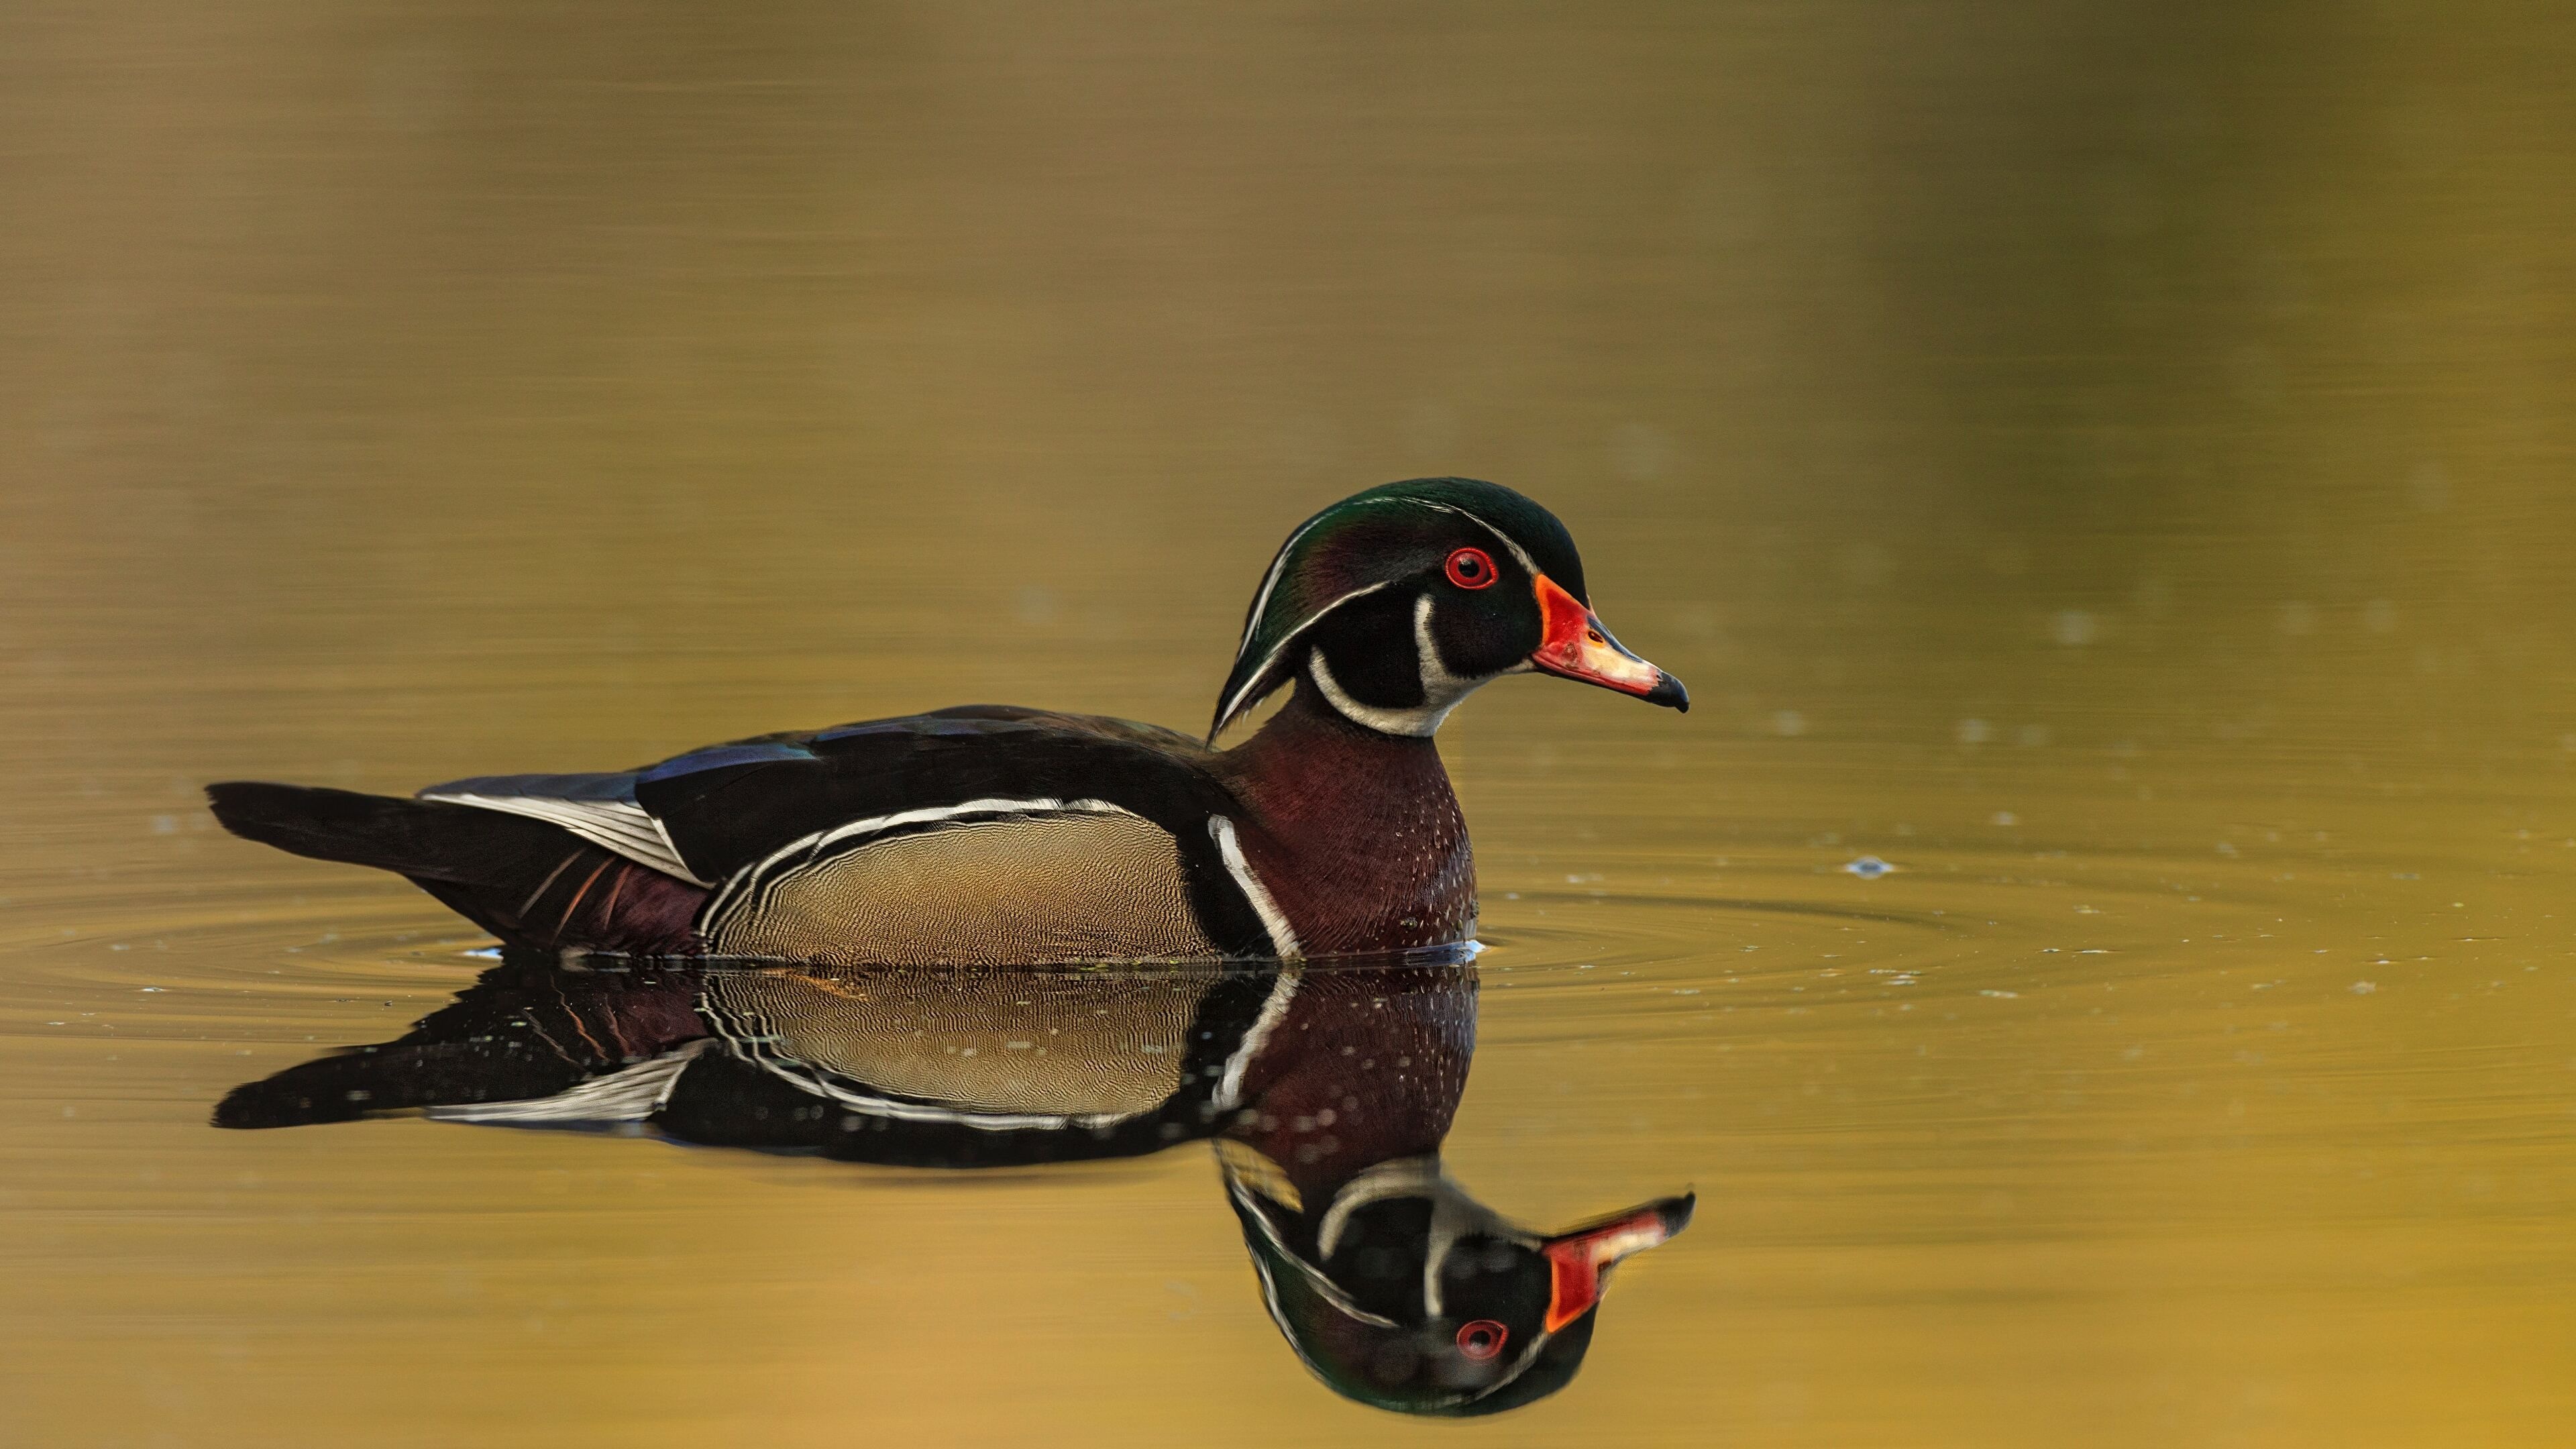 Wood duck photo, Majestic waterfowl, Captivating wildlife photography, Stunning duck portrait, 3840x2160 4K Desktop